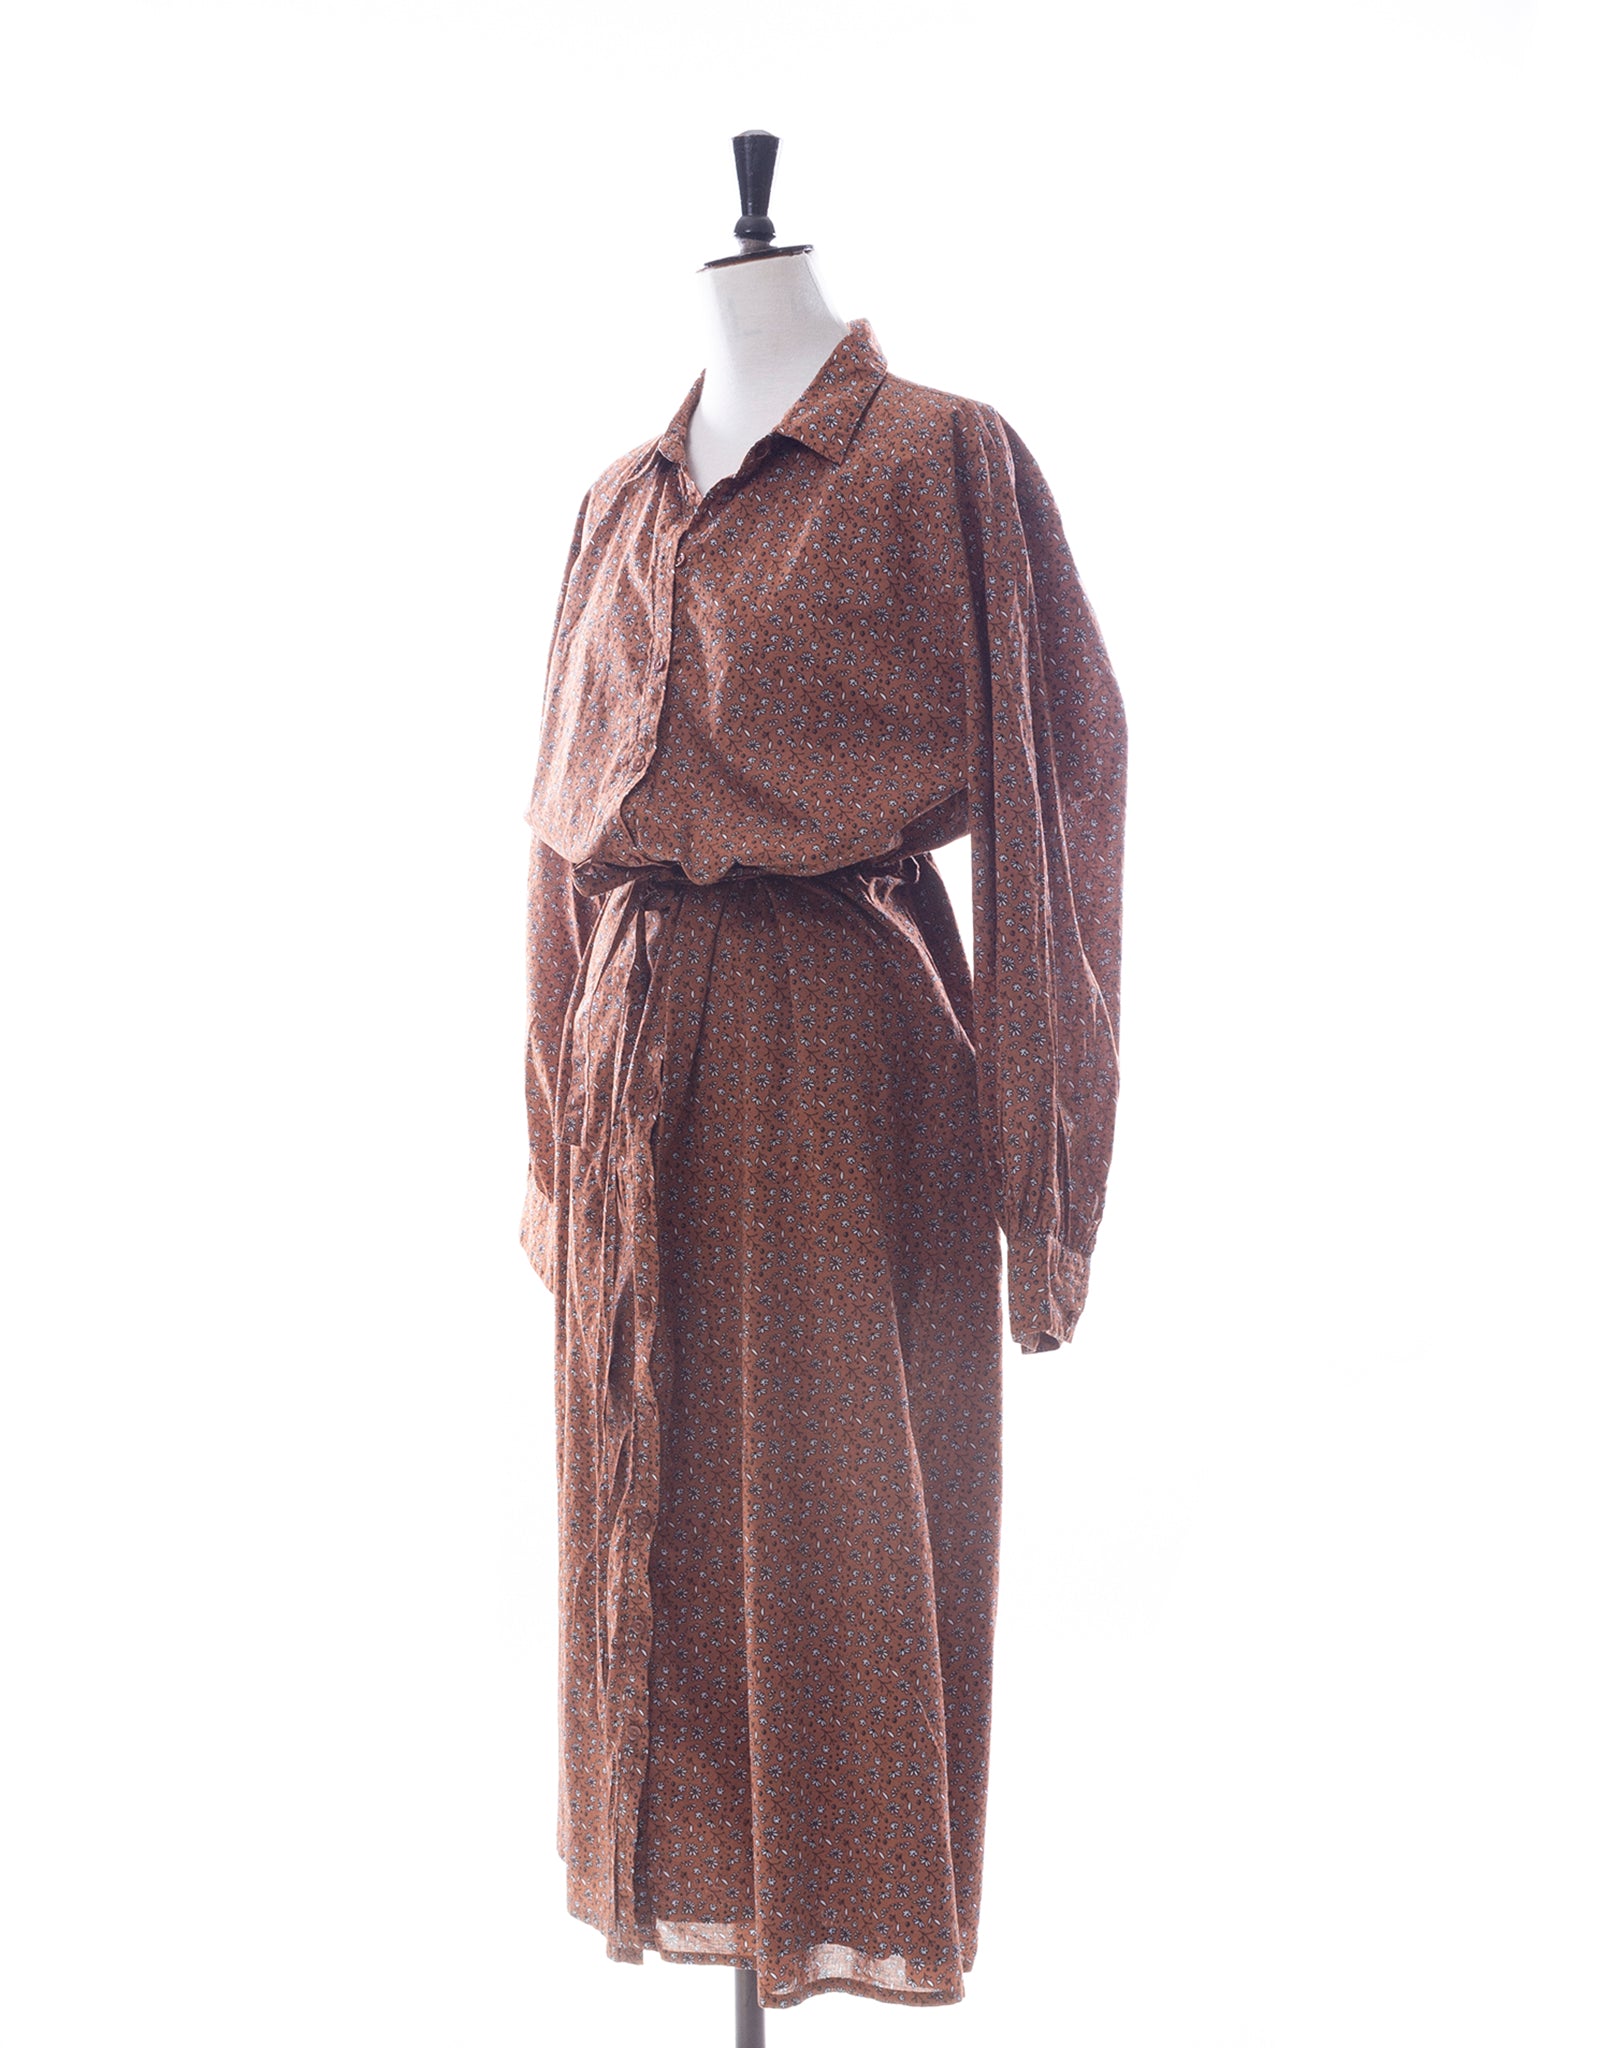 Miann & Co Brown Daisy Floral Long Sleeve Dress - Size XL